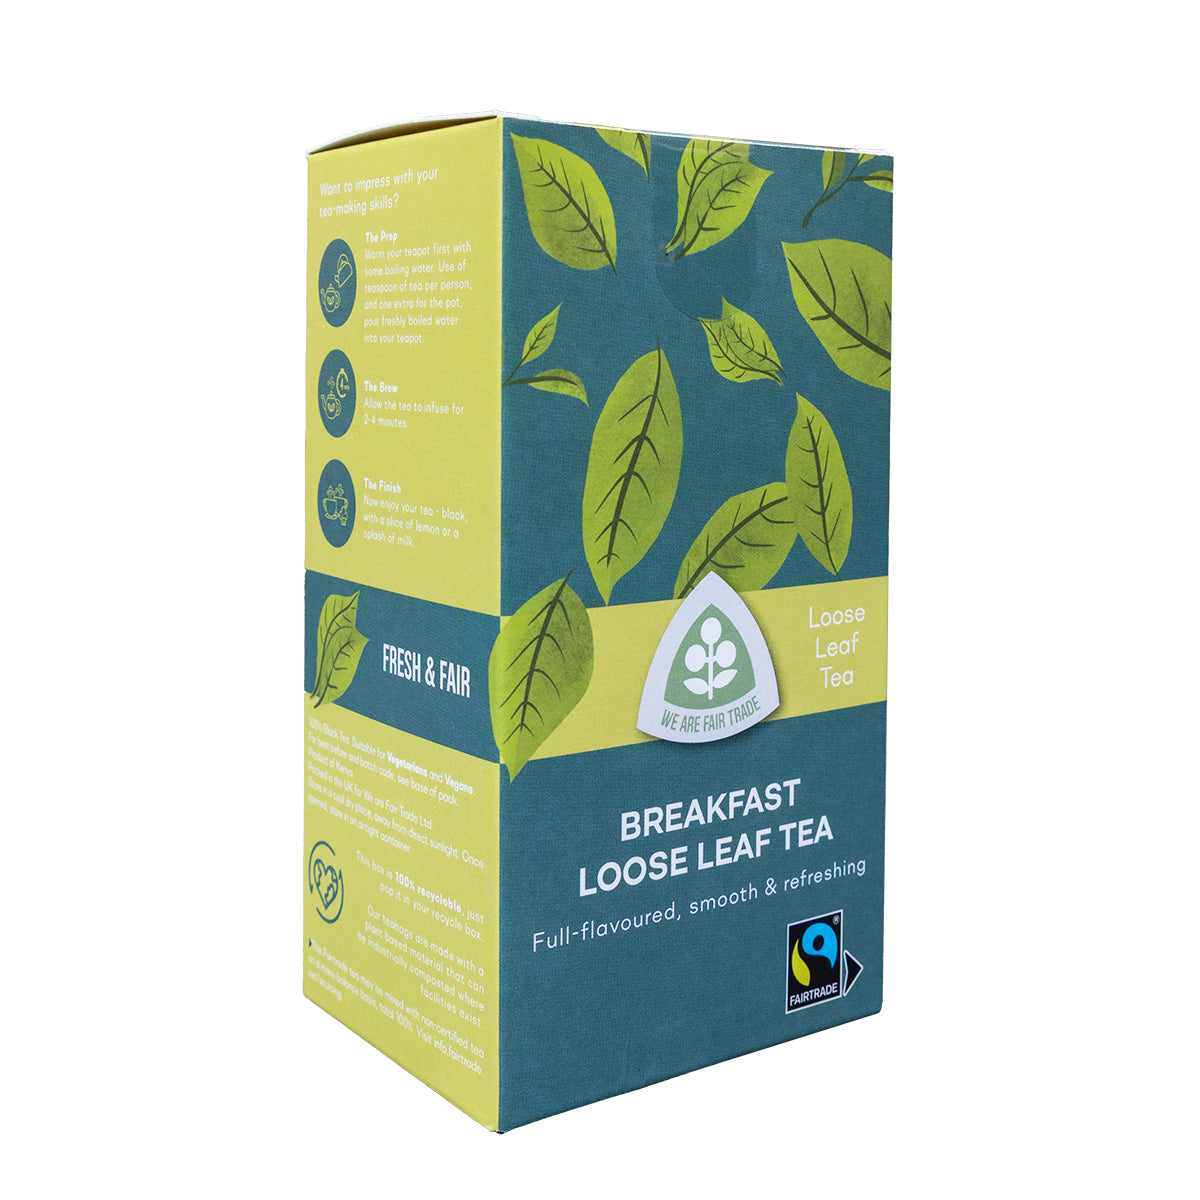 We are Fairtrade breakfast blend loose leaf tea